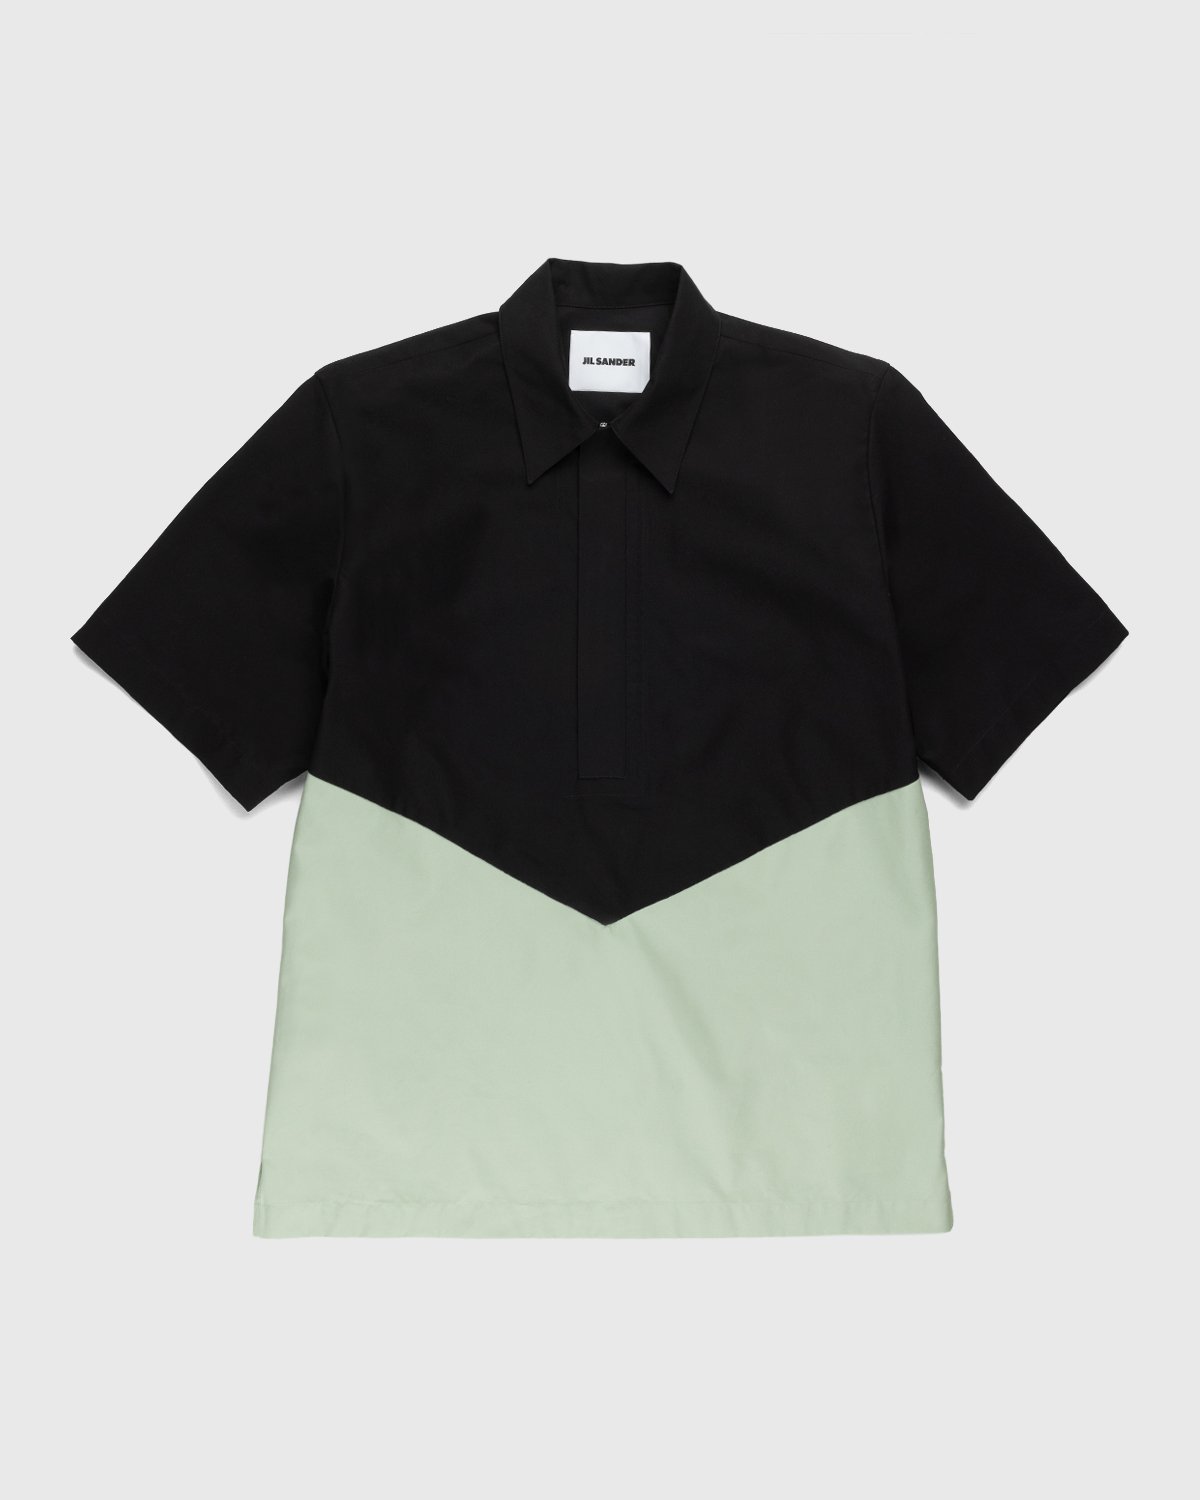 Jil Sander - Two-Tone Diagonal Cut Shirt Black/Green - Clothing - Green - Image 1